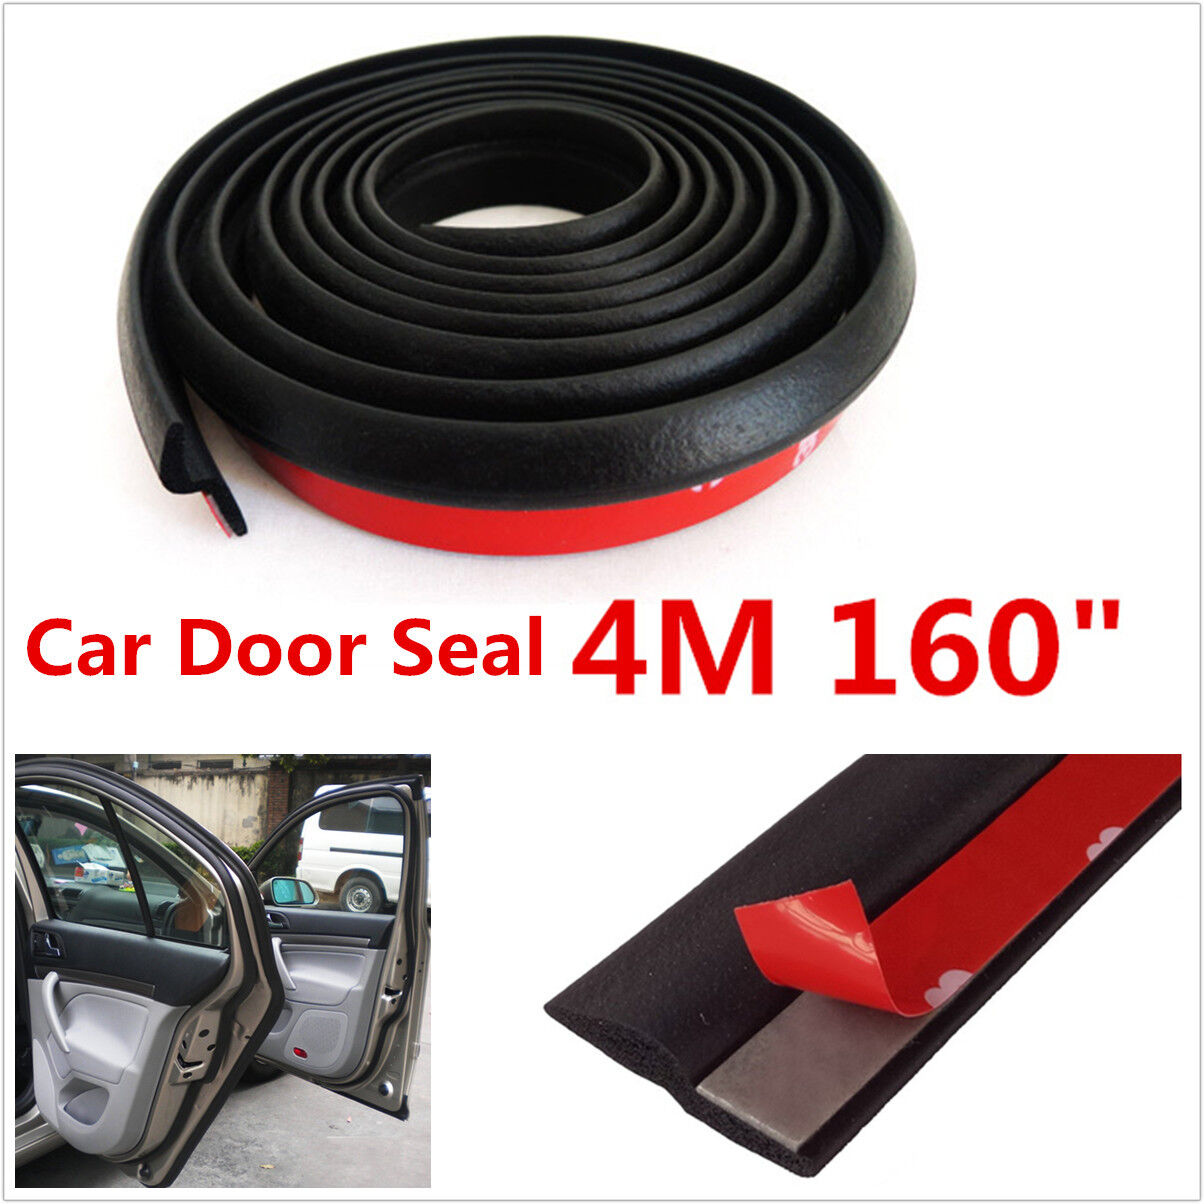 Car Door Seal Strip,Z shape 4M Universal Car Truck Motor Door Window Trim Edge Guard Rubber Seal Hollow Weather Strip Rubber Draft Seal Strip